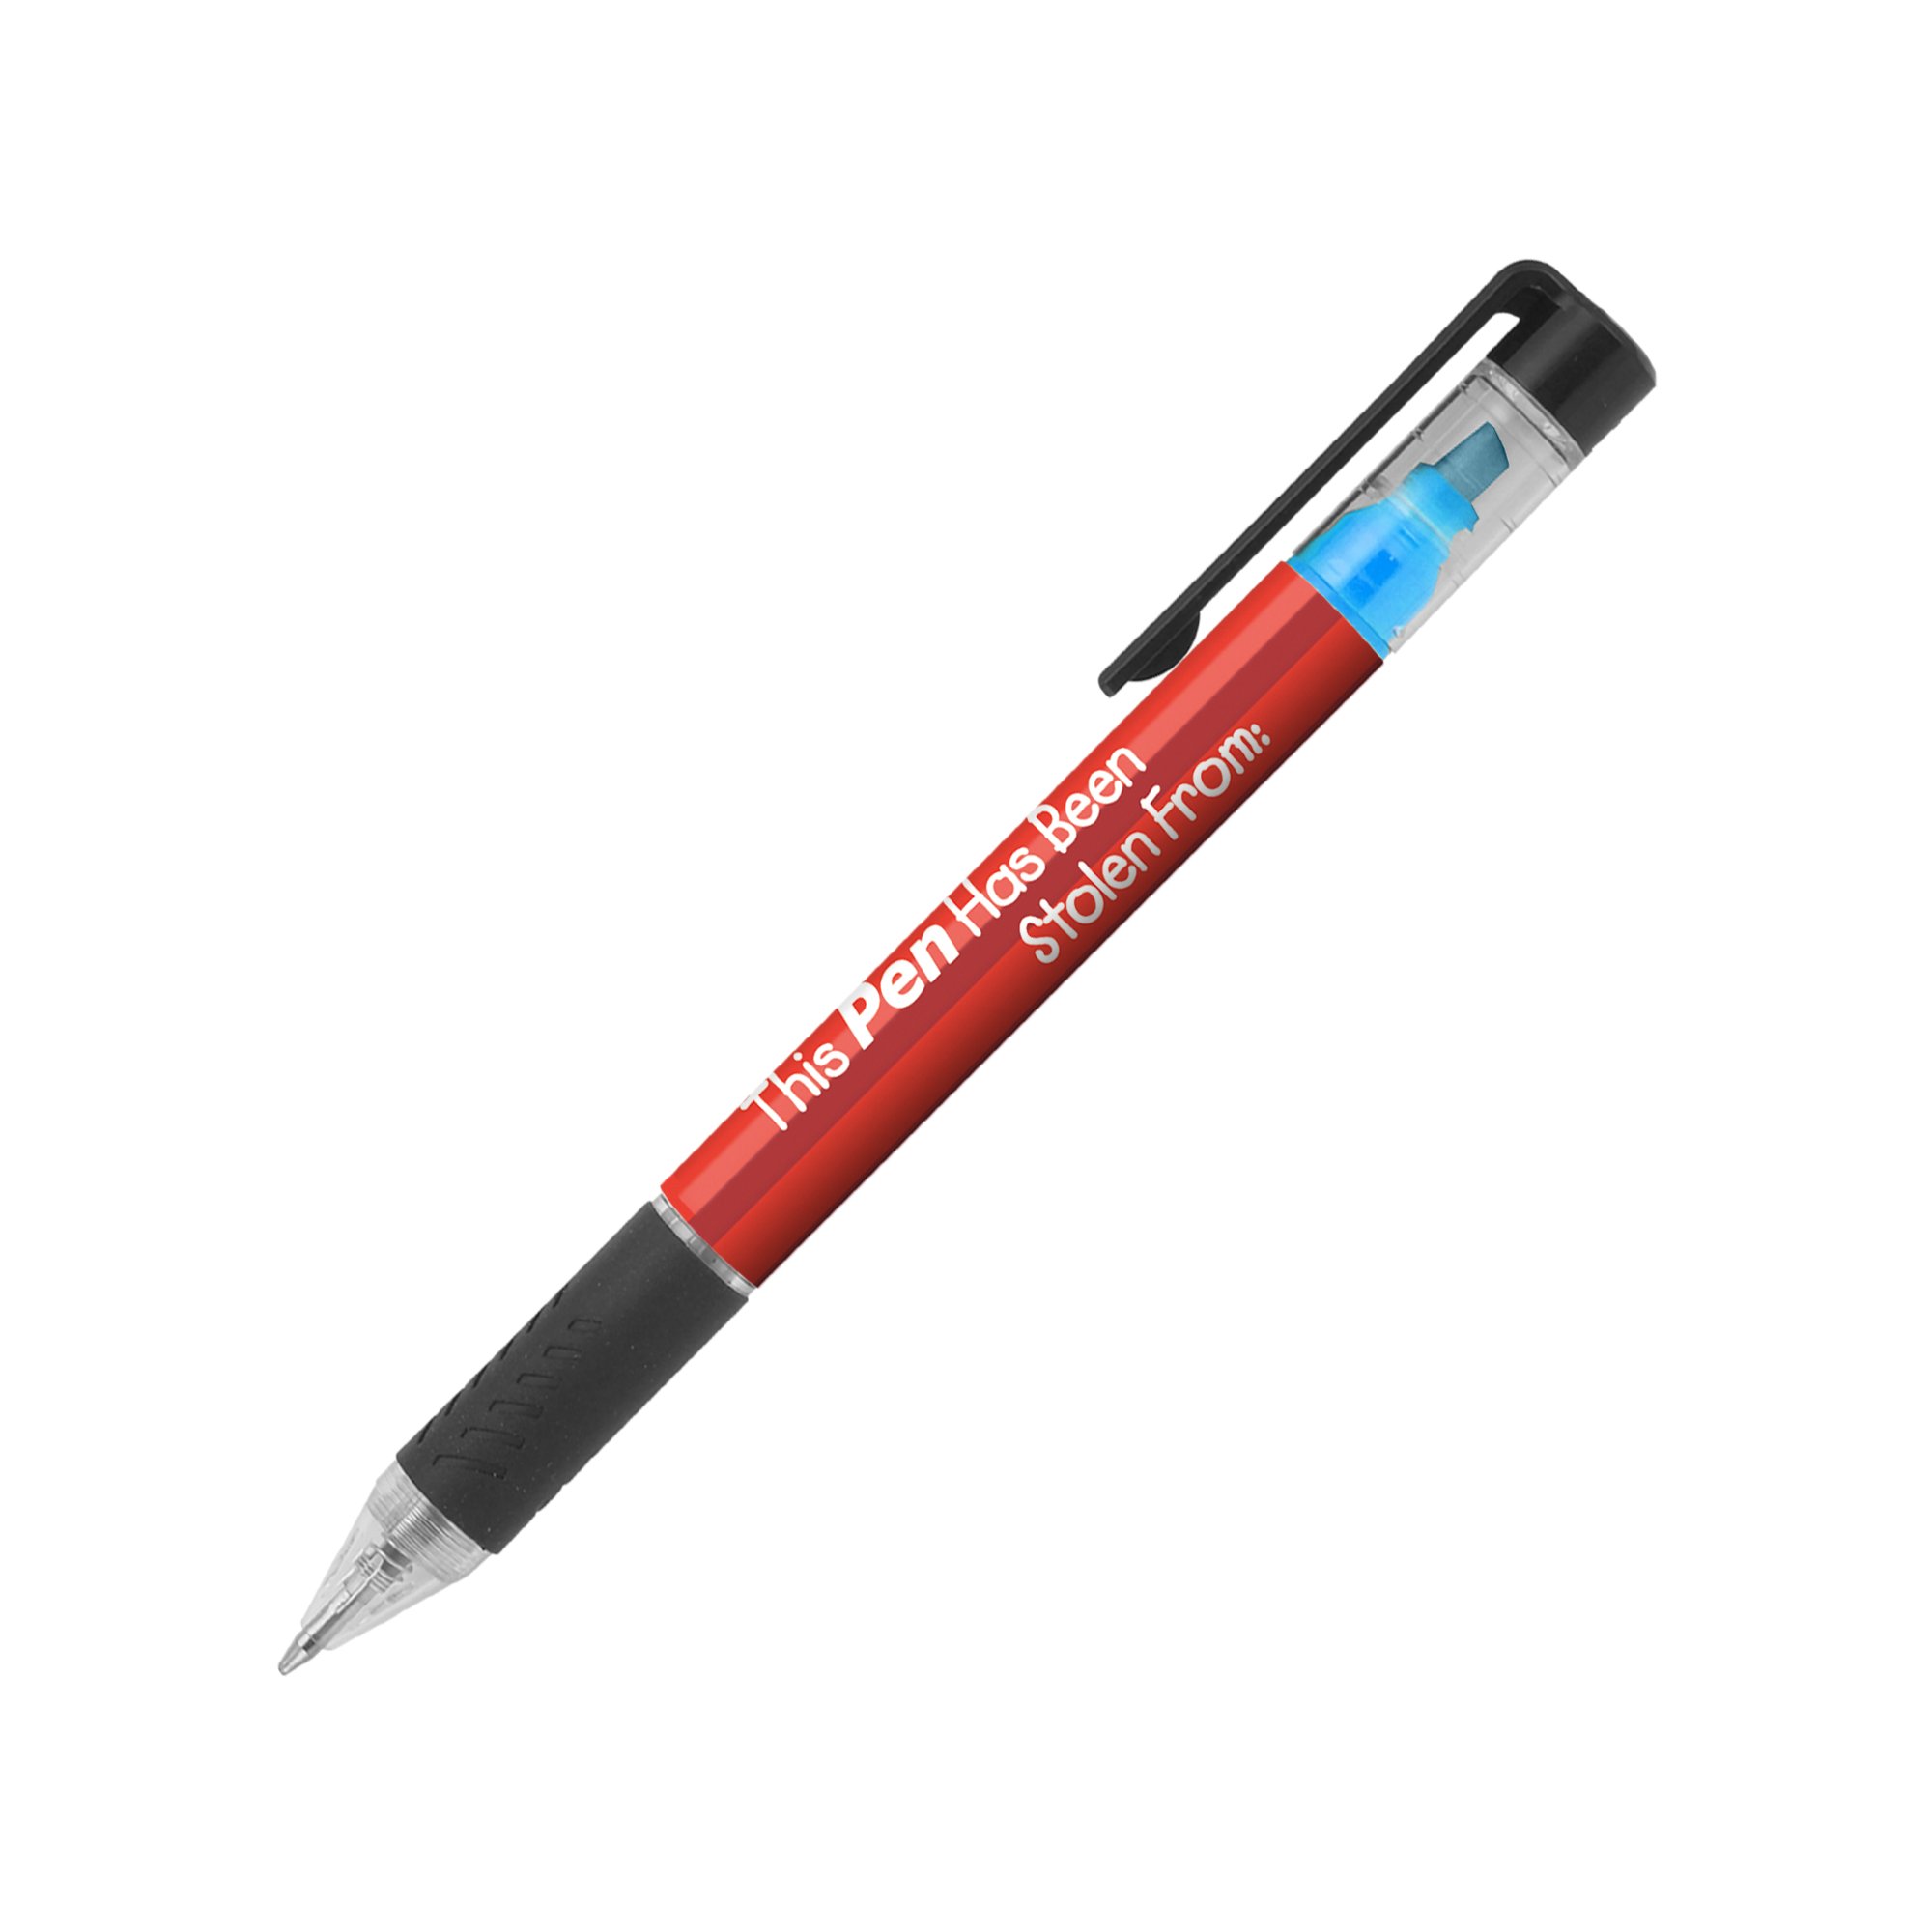 Promotional Duet Pen and Highlighter | National Pen